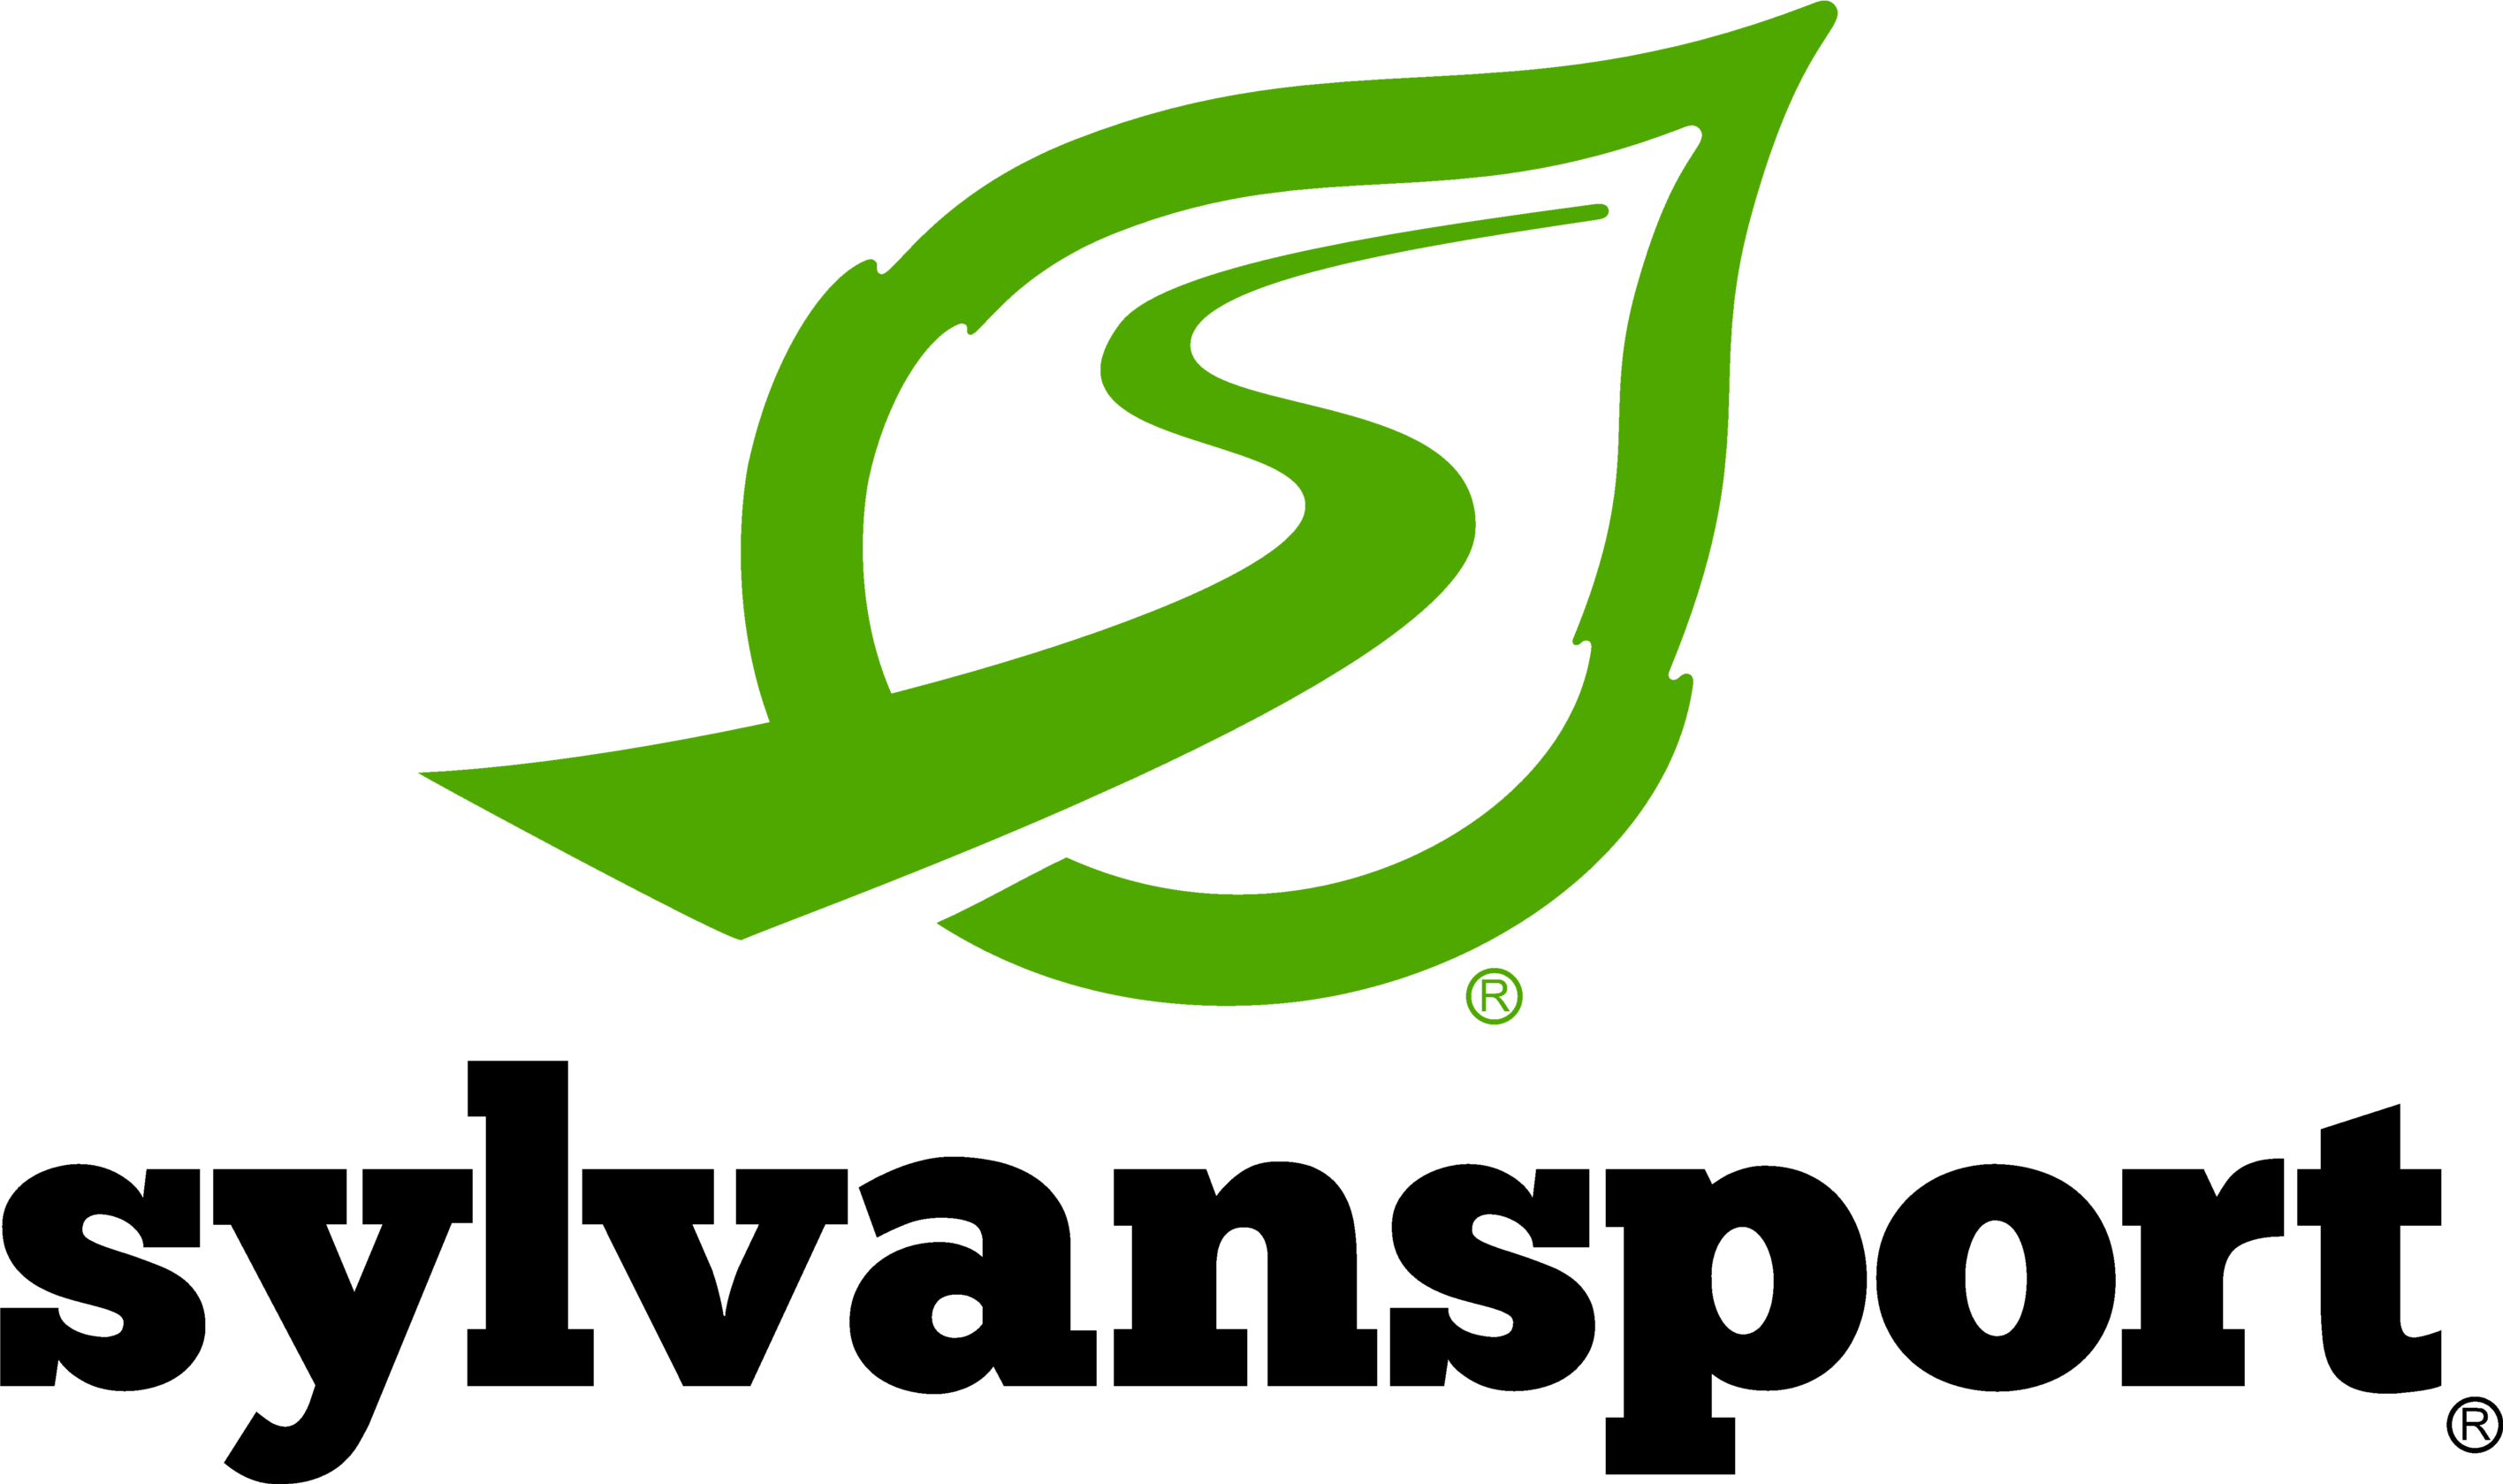 Black SS Logo - 2018 SS logo black and green 1 - SylvanSport